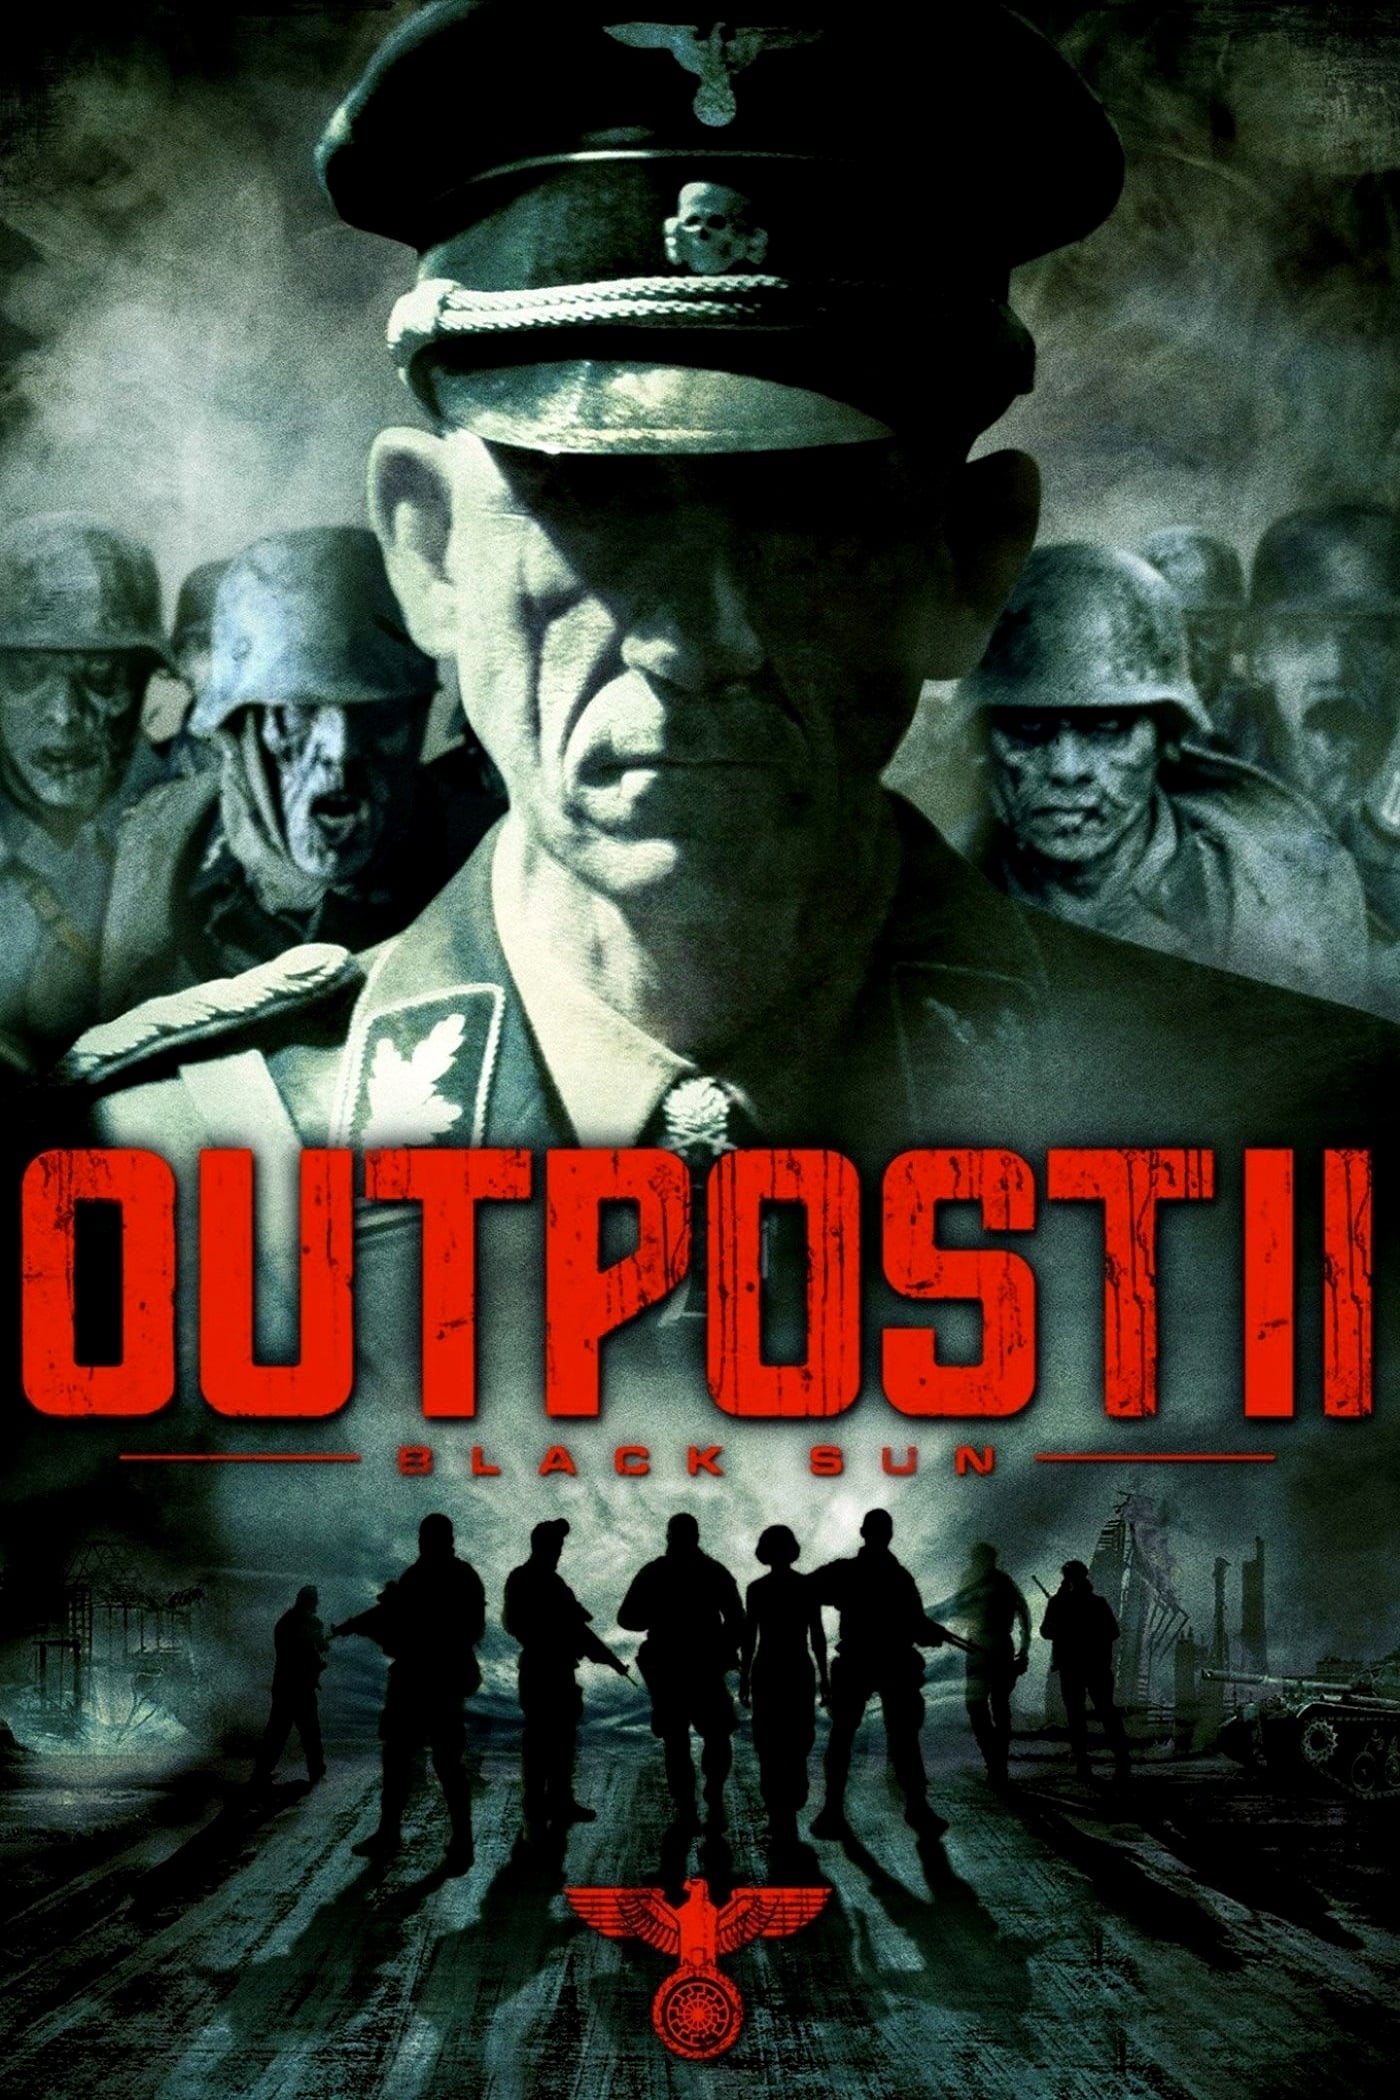 Outpost: Black Sun film